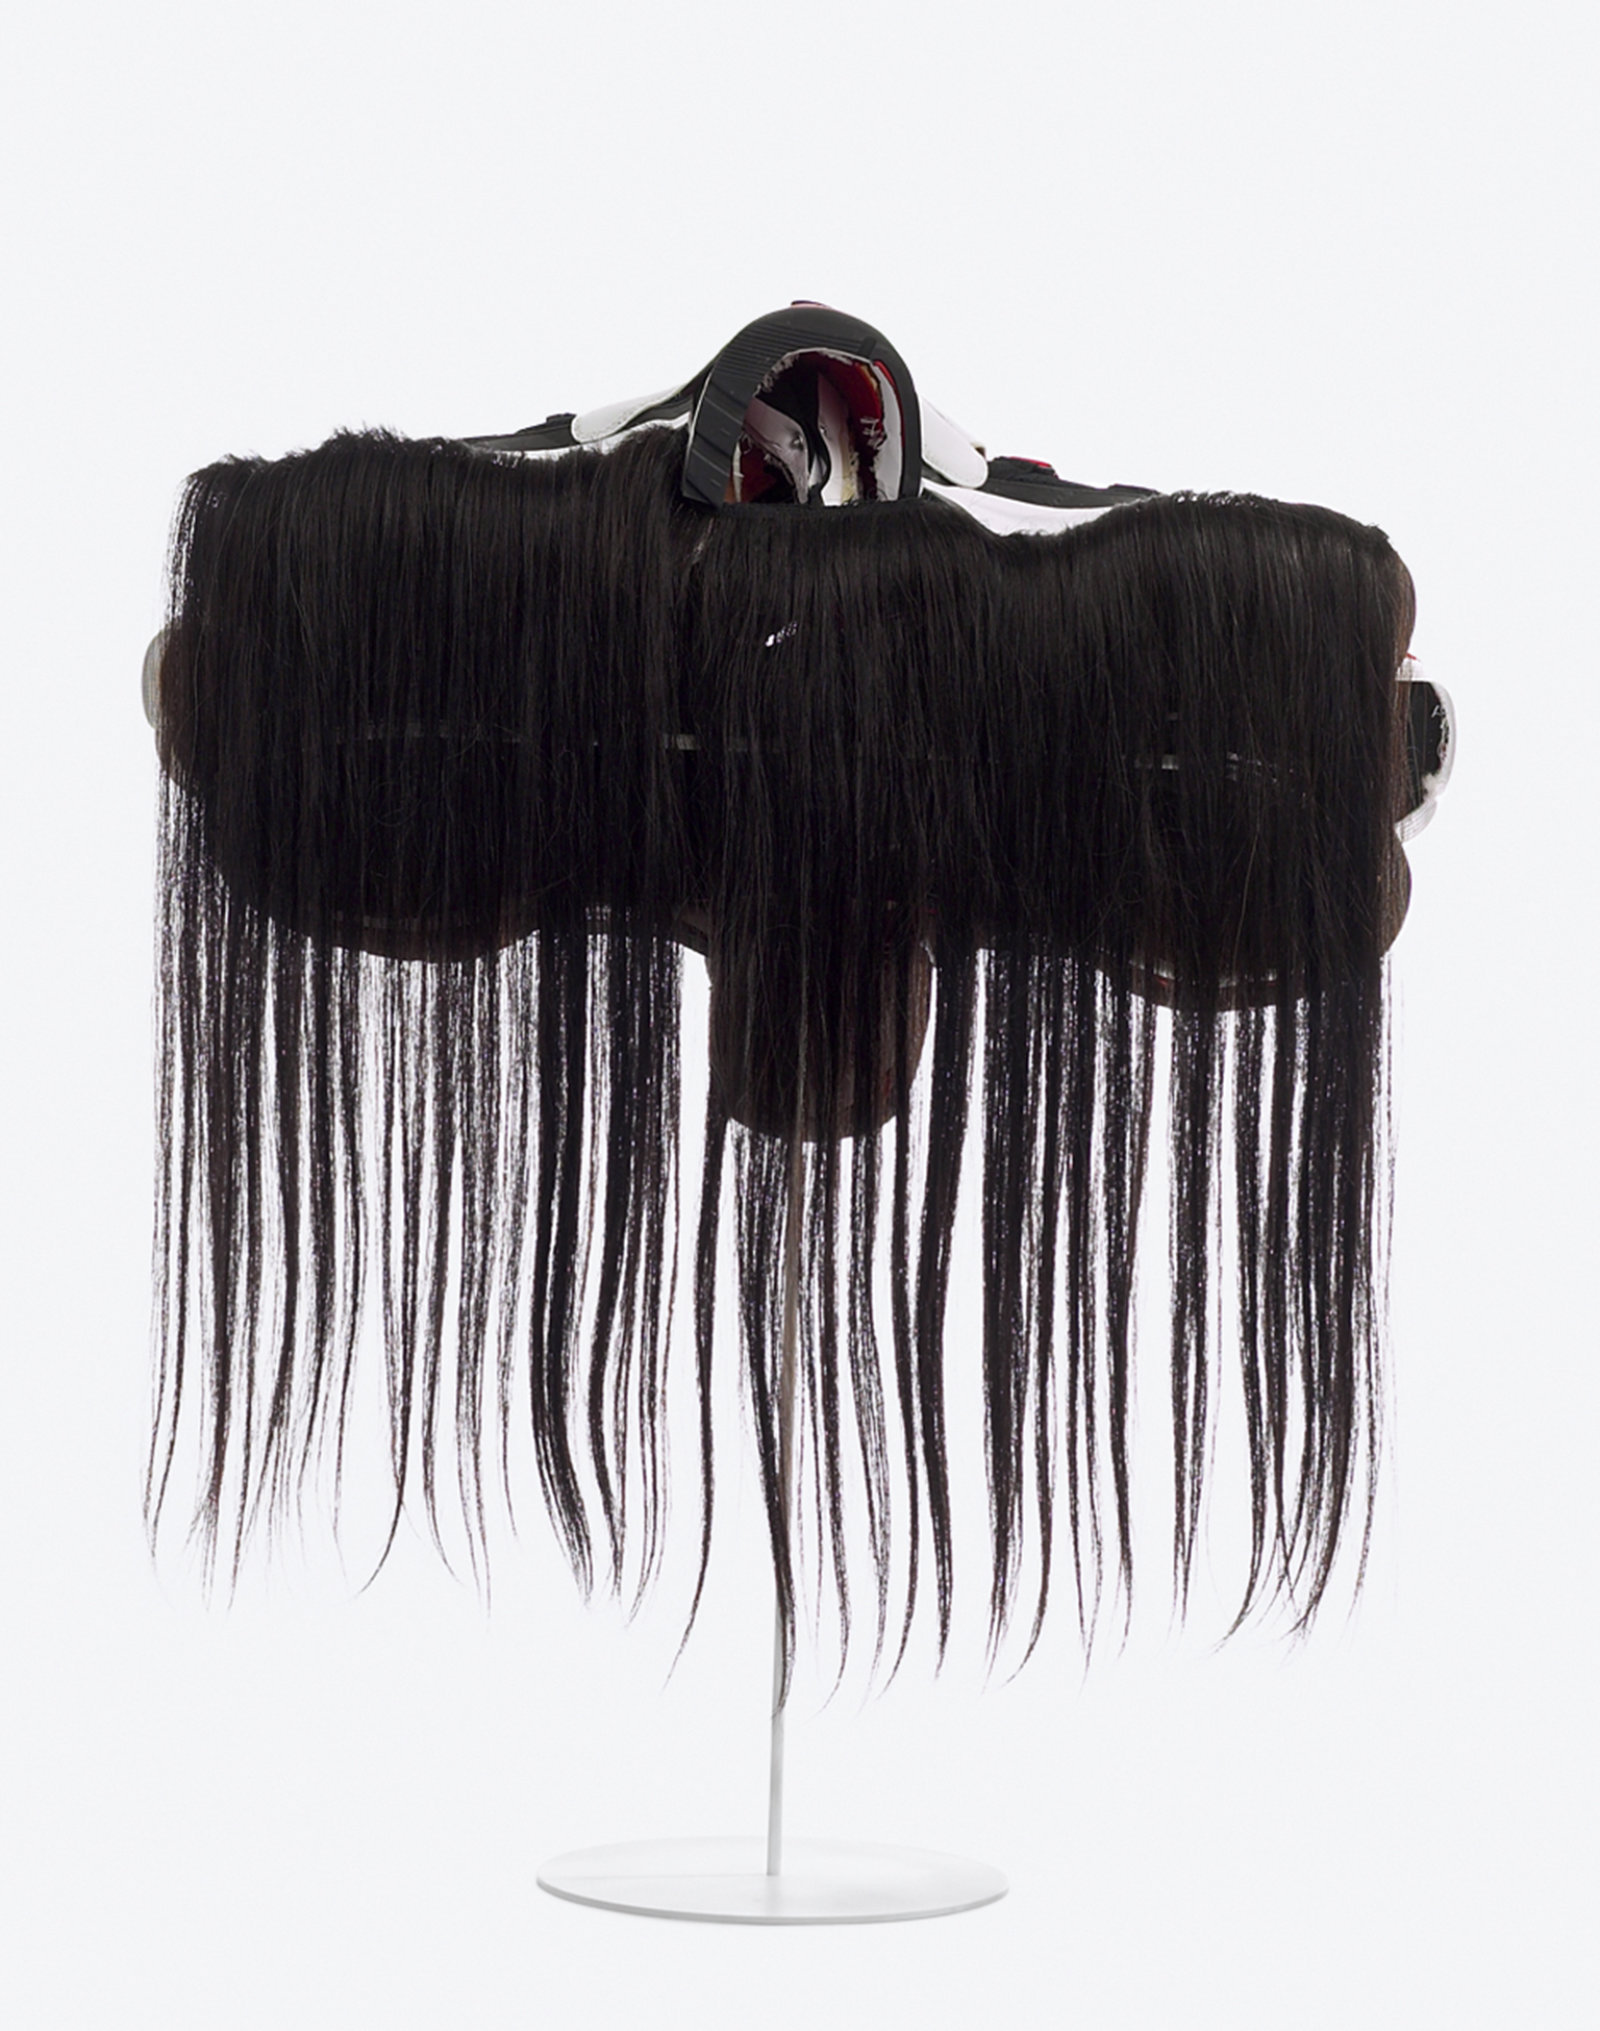 Brian Jungen, Prototype for New Understanding #11, 2002, nike air jordans, human hair, 26 x 23 x 10 in. (67 x 58 x 25 cm)